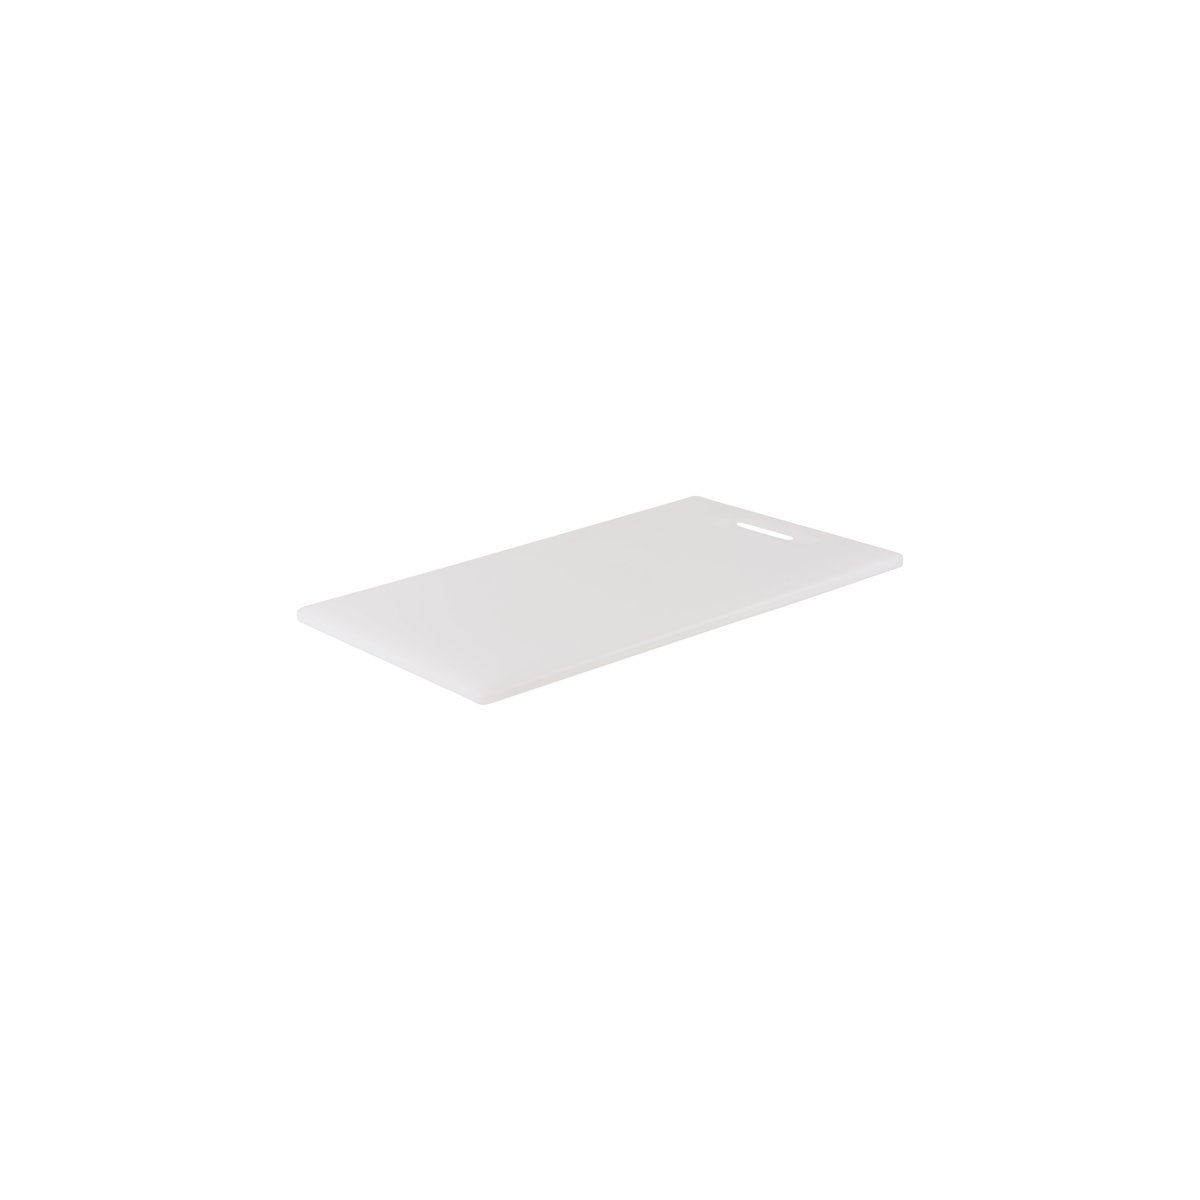 04315 Chef Inox Cutting Board Polyethylene White with Handle 205x355x12mm Tomkin Australia Hospitality Supplies